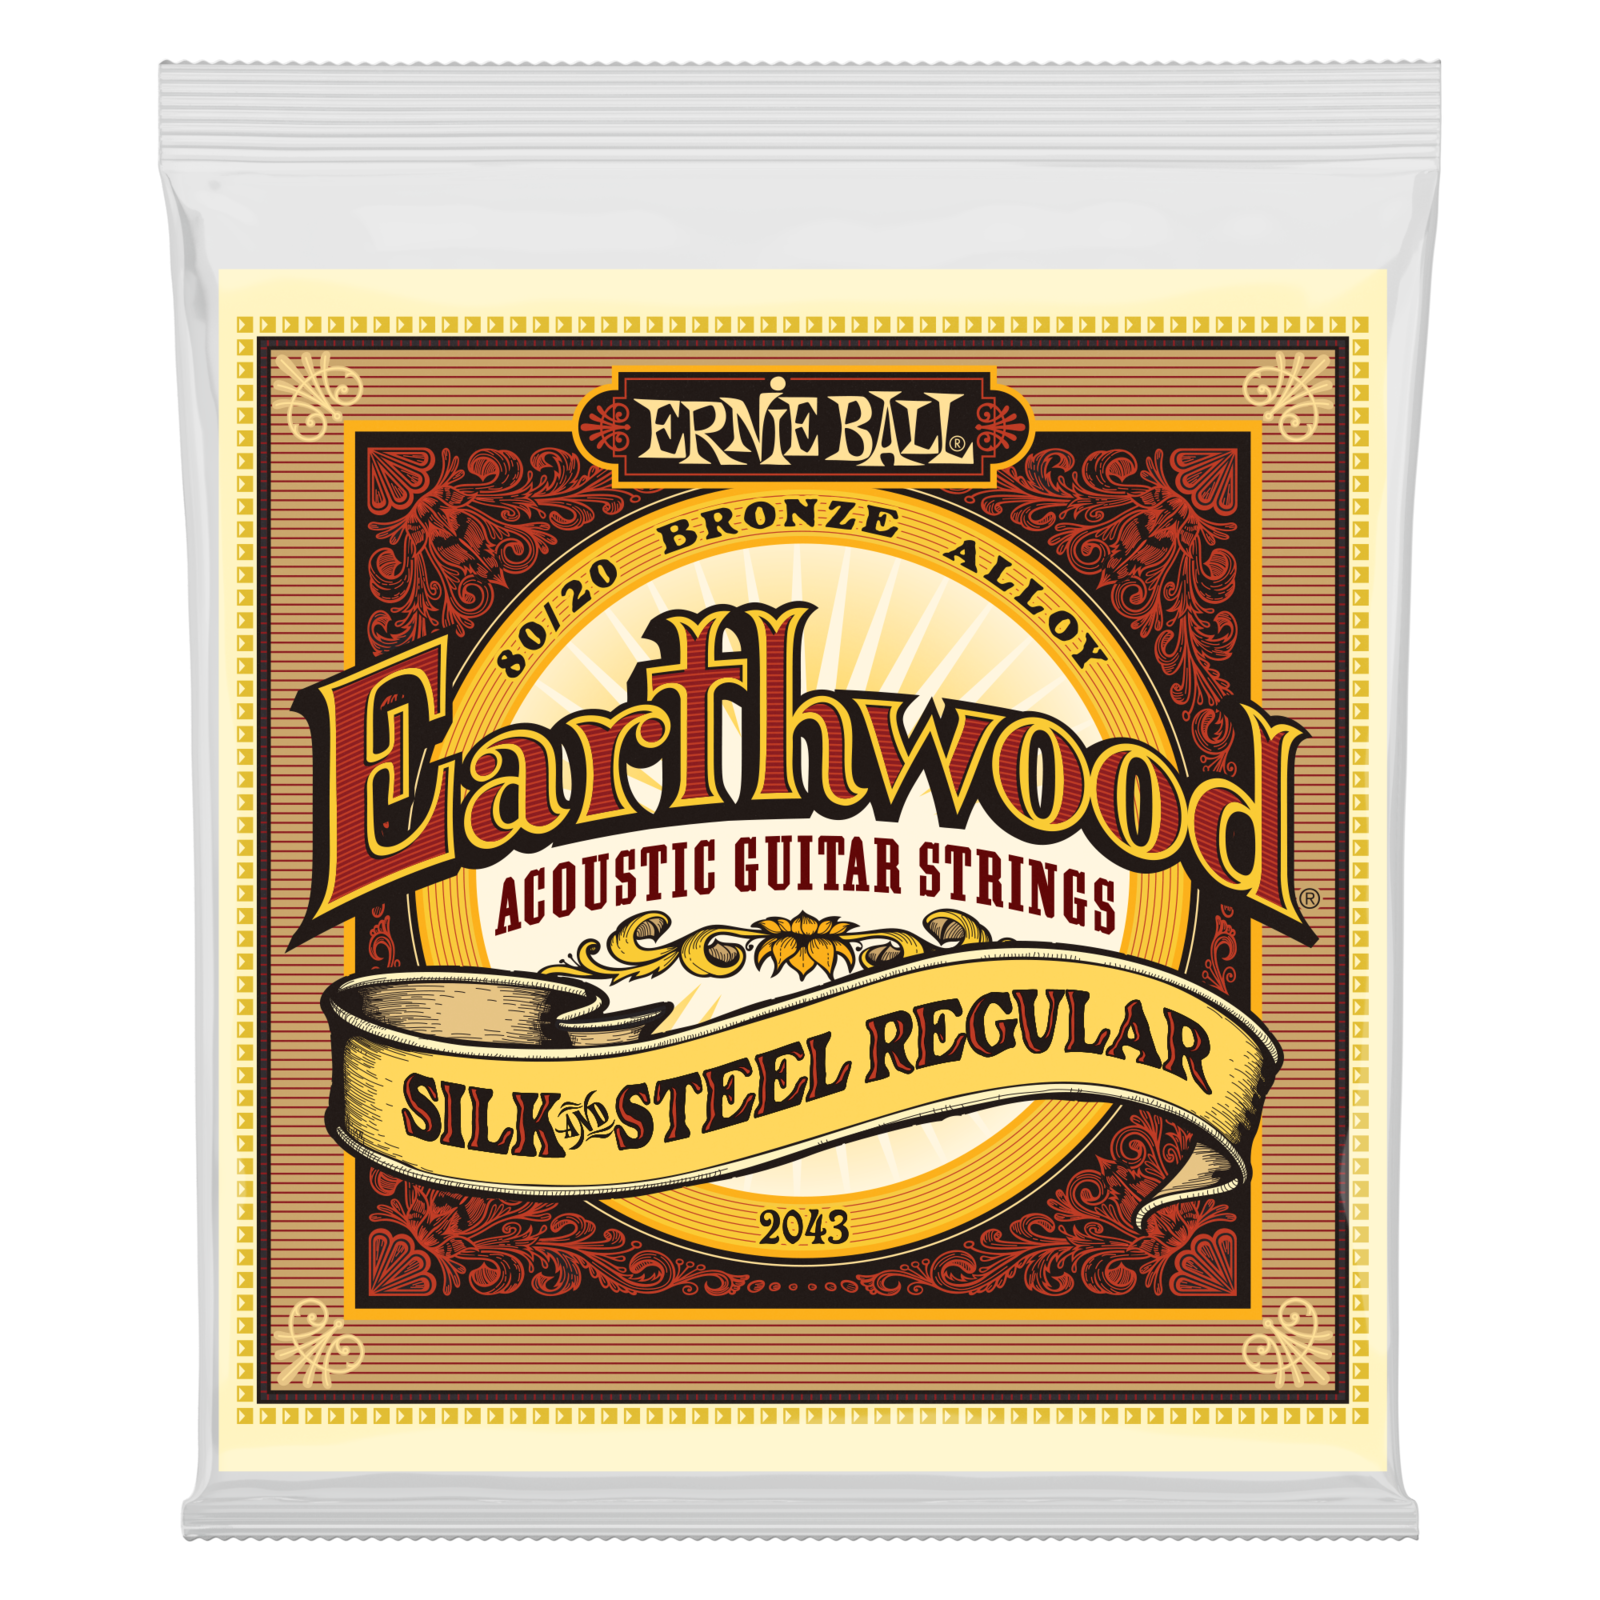 Guitar strings Ernie Ball 2043 Earthwood Silk & Steel